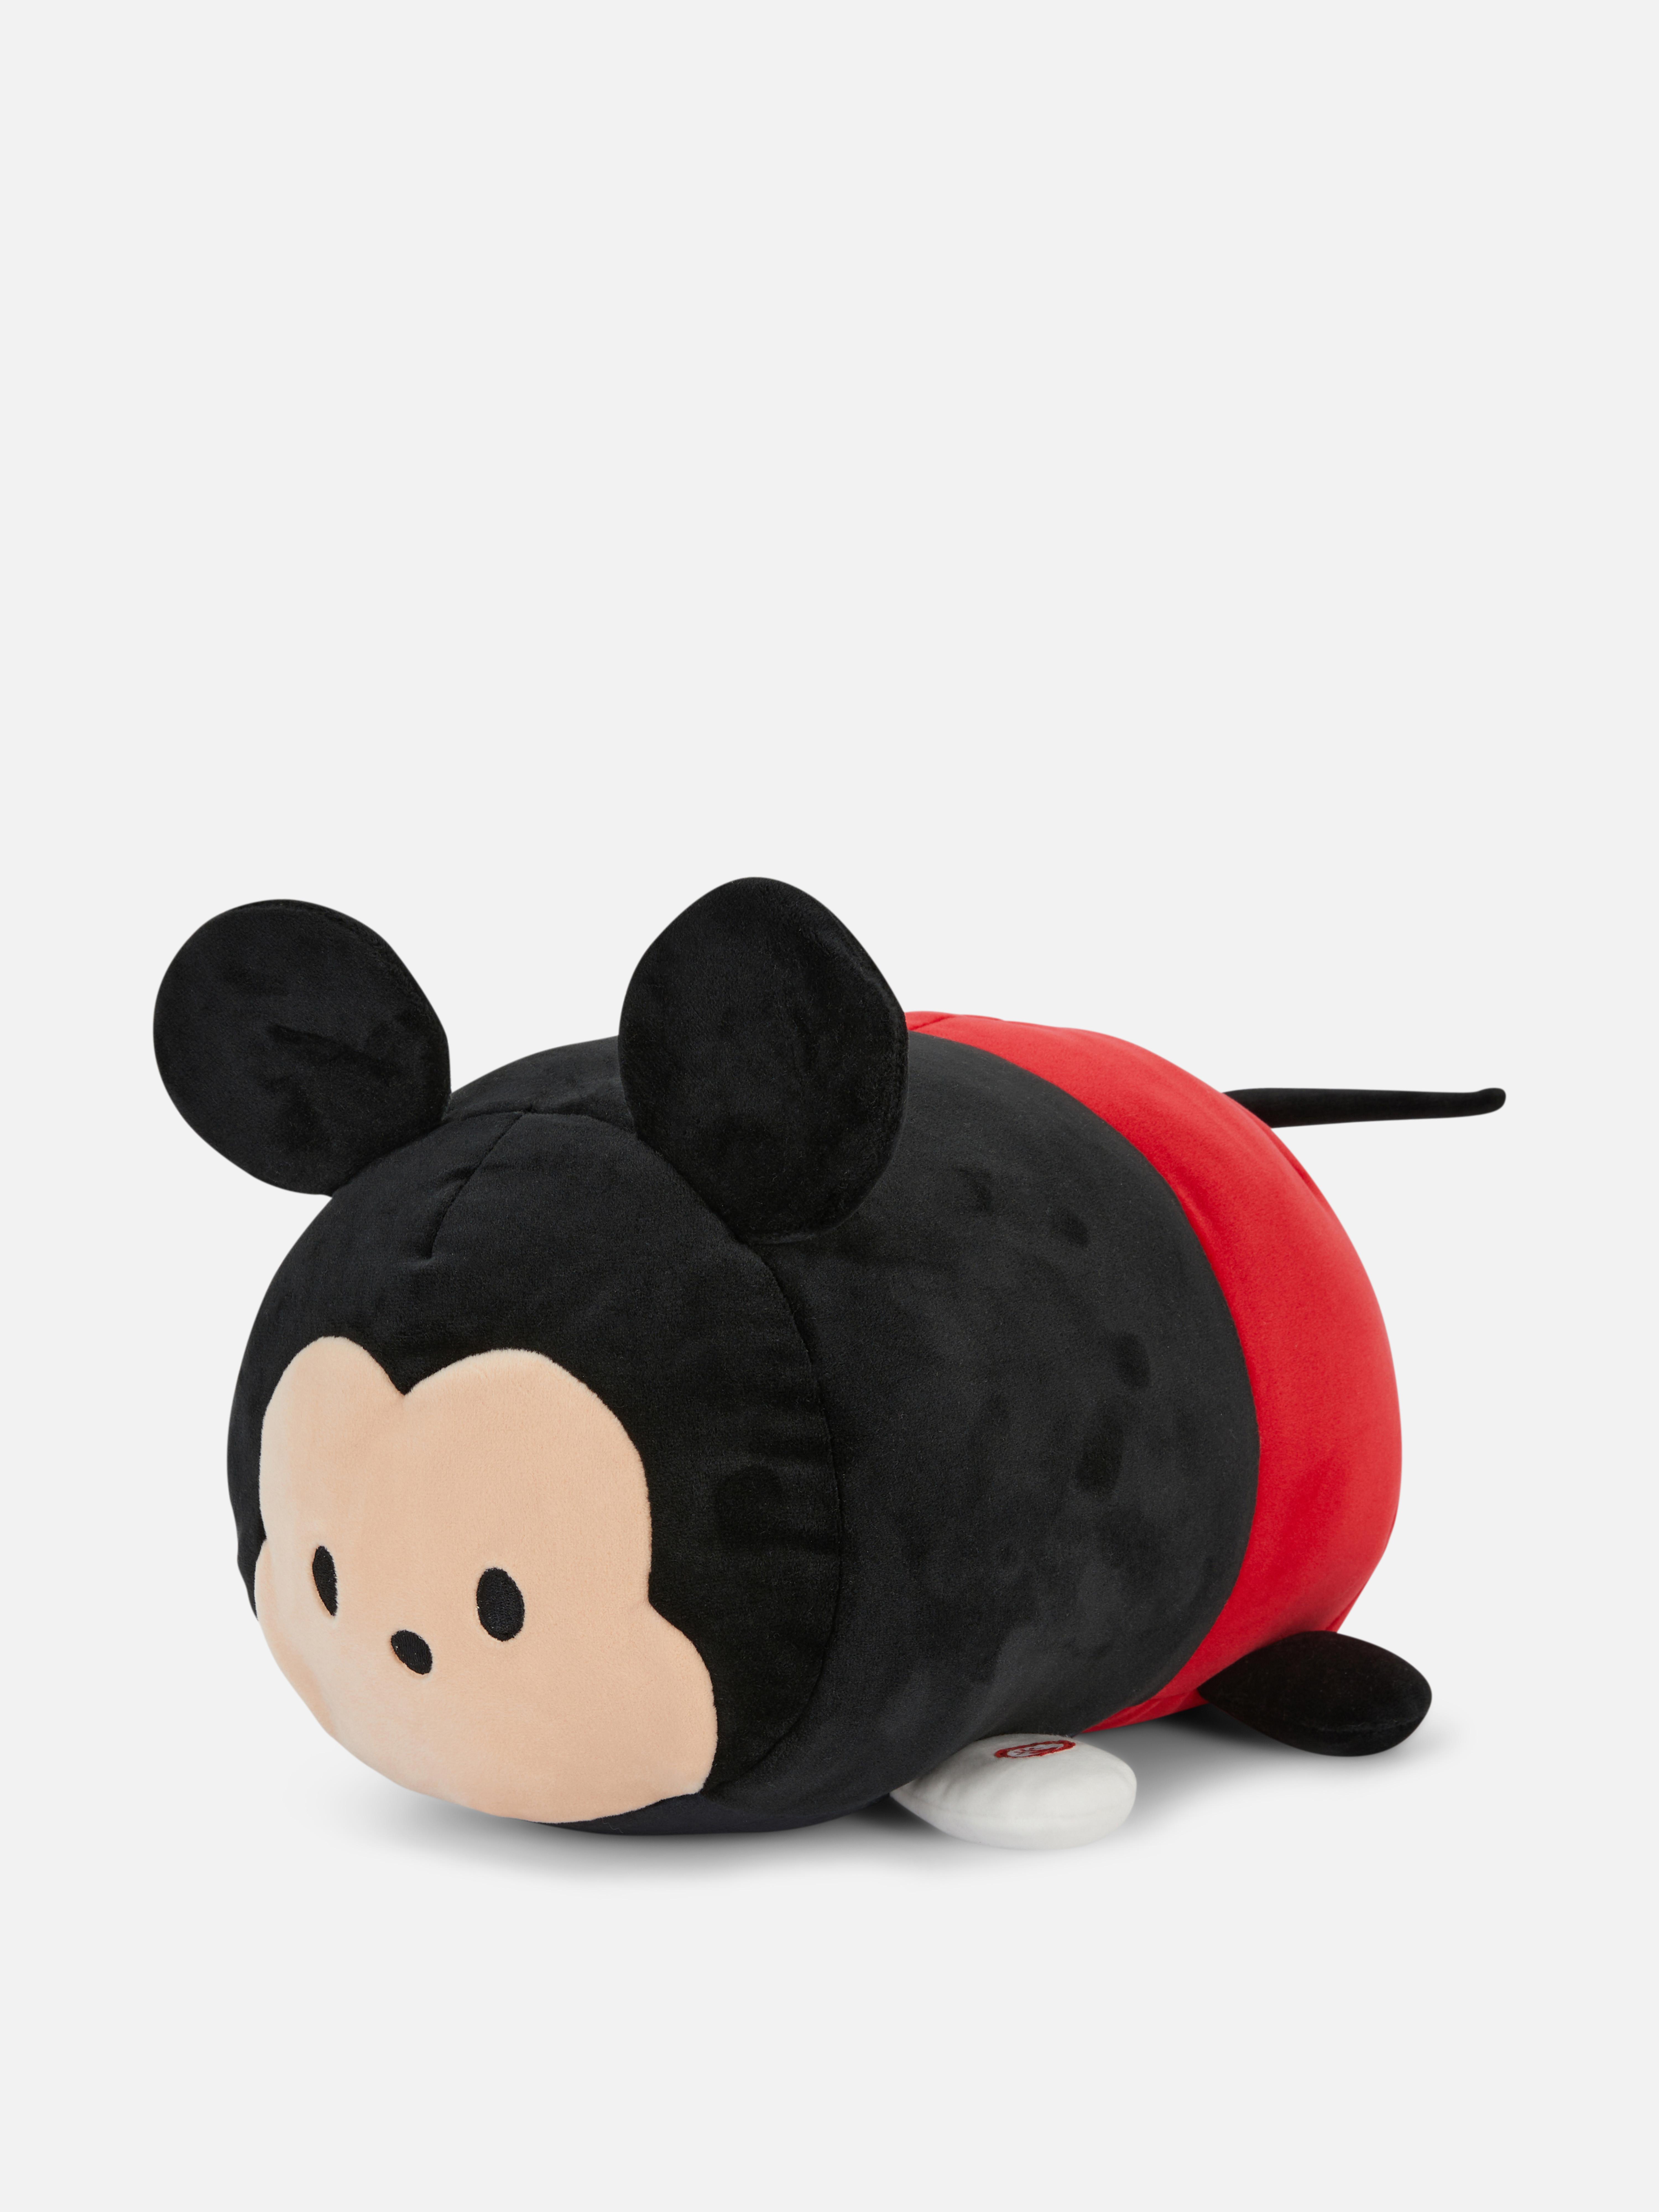 „Disney Tsum Tsum Micky Maus“ Plüschtier